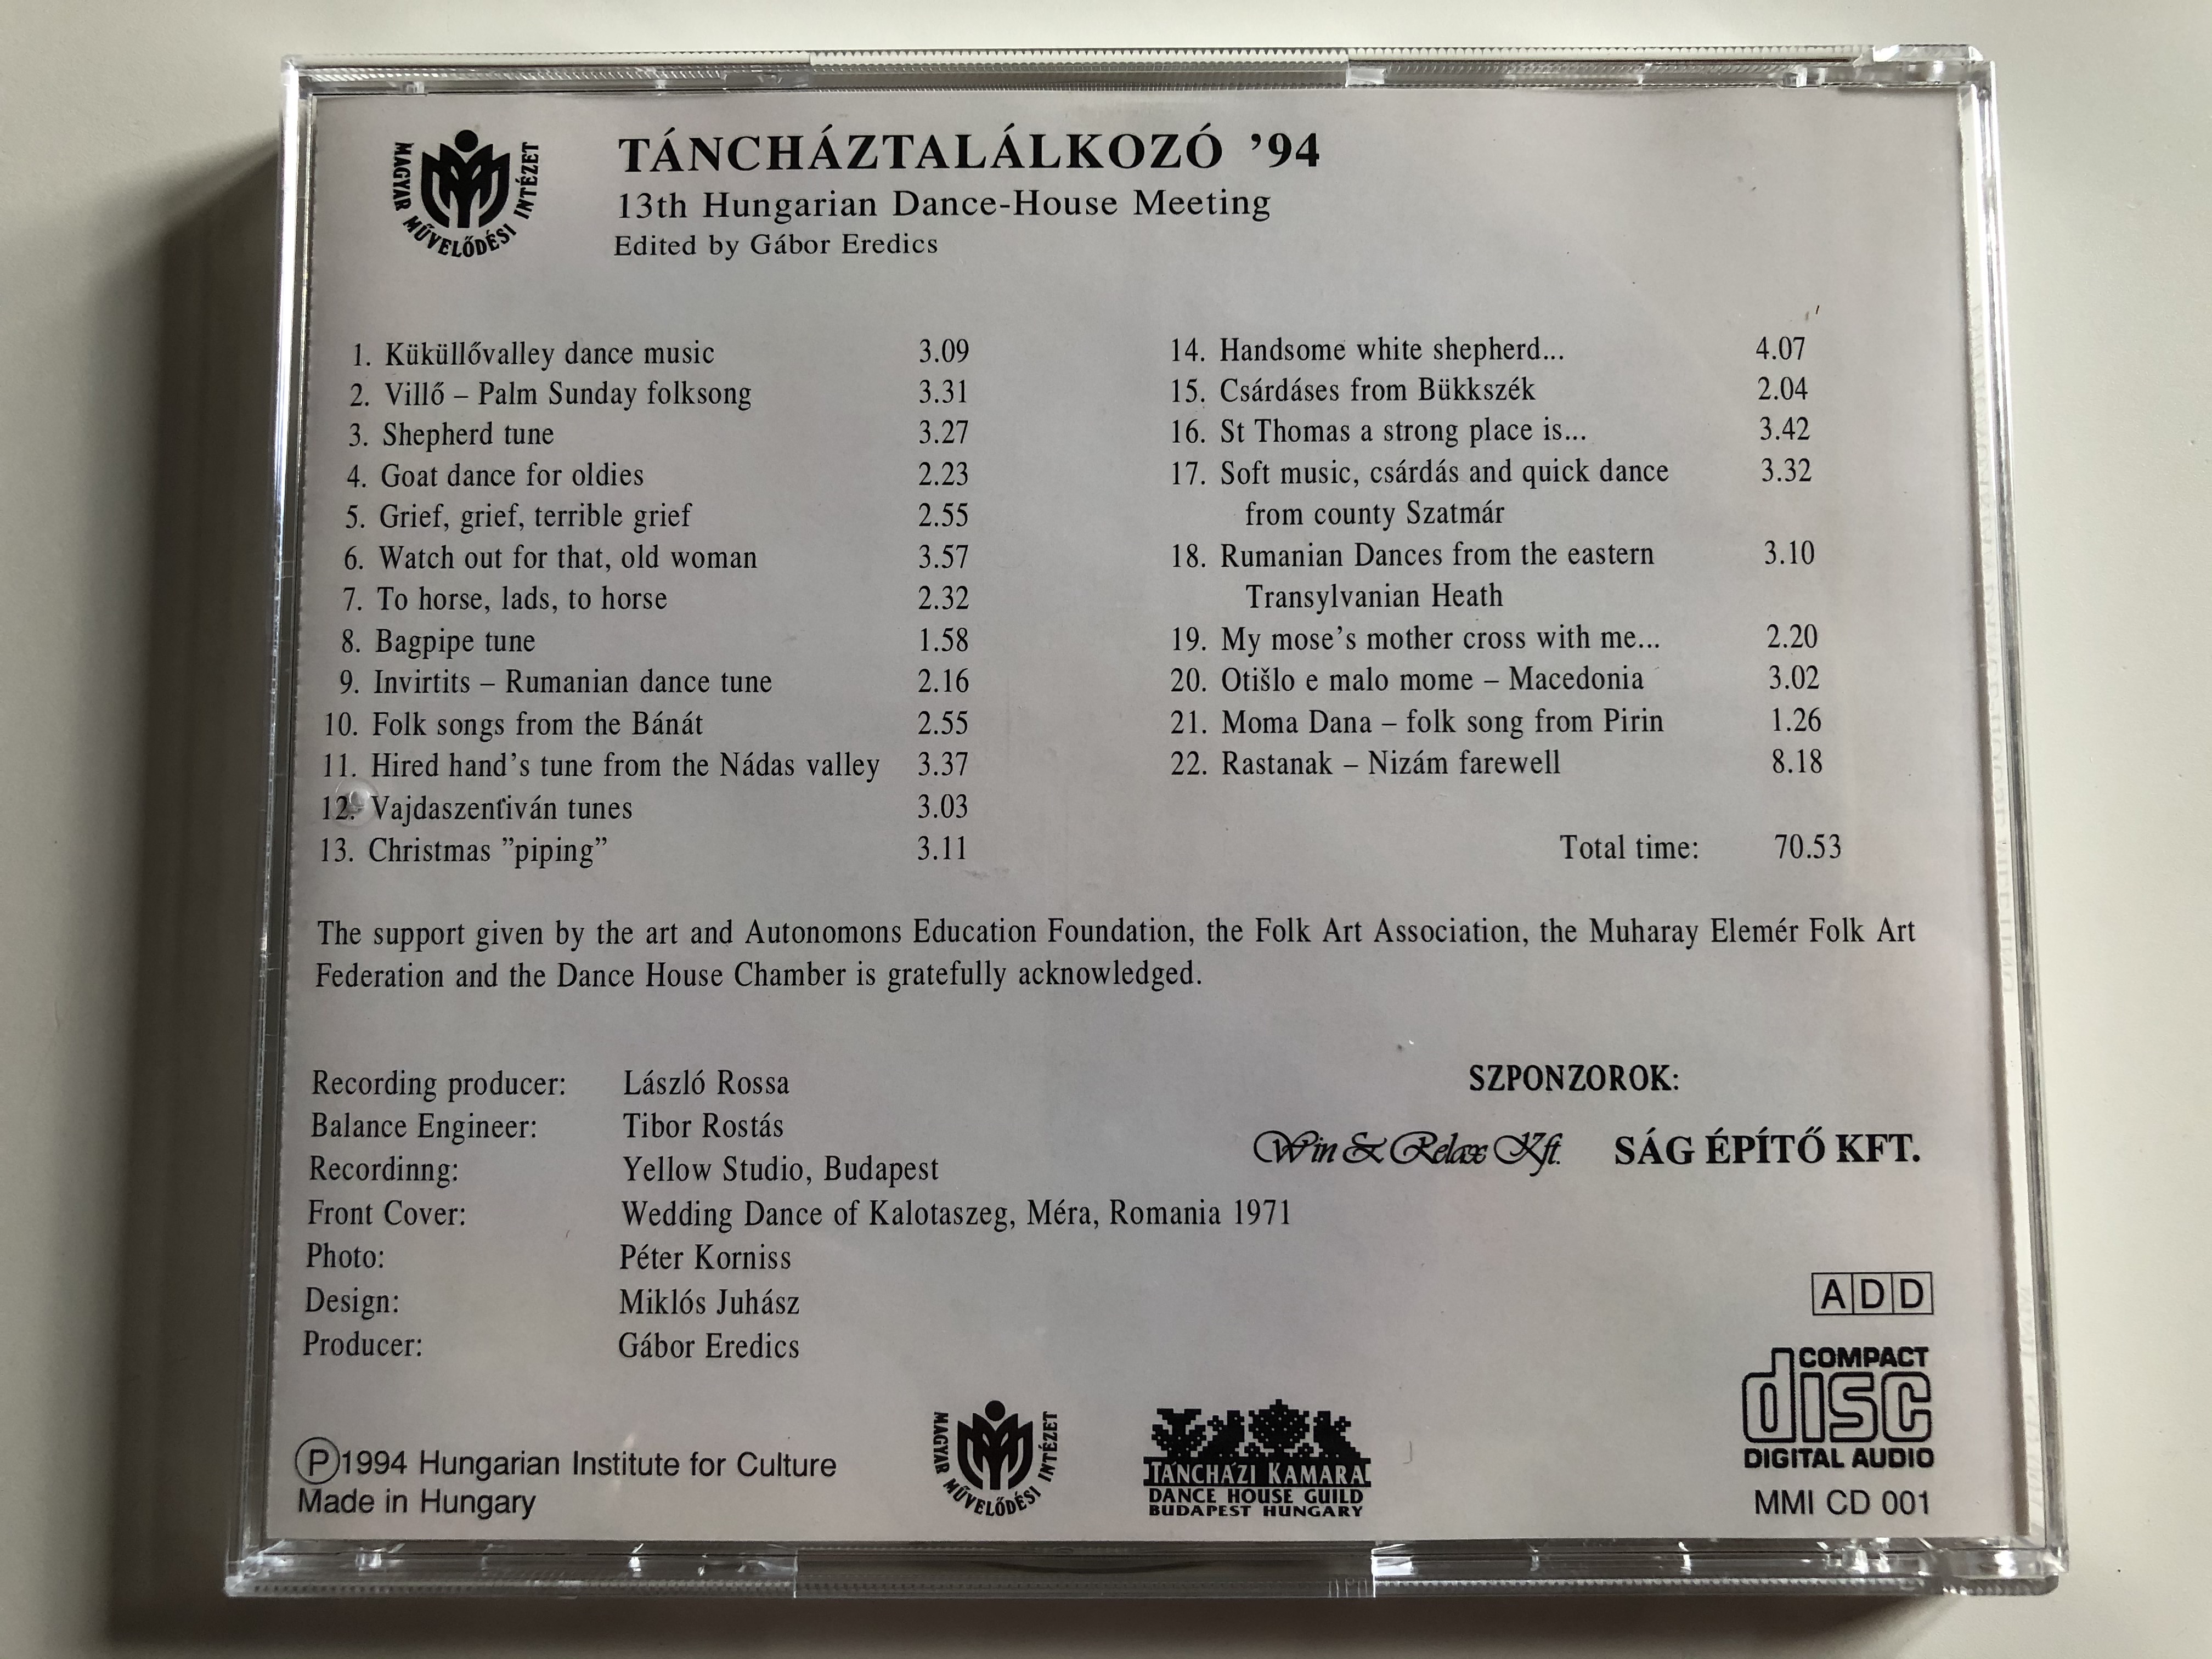 t-nch-z-tal-lkoz-94-13th-hungarian-dance-house-meeting-magyar-m-vel-d-si-int-zet-audio-cd-1994-stereo-mmi-cd-001-6-.jpg